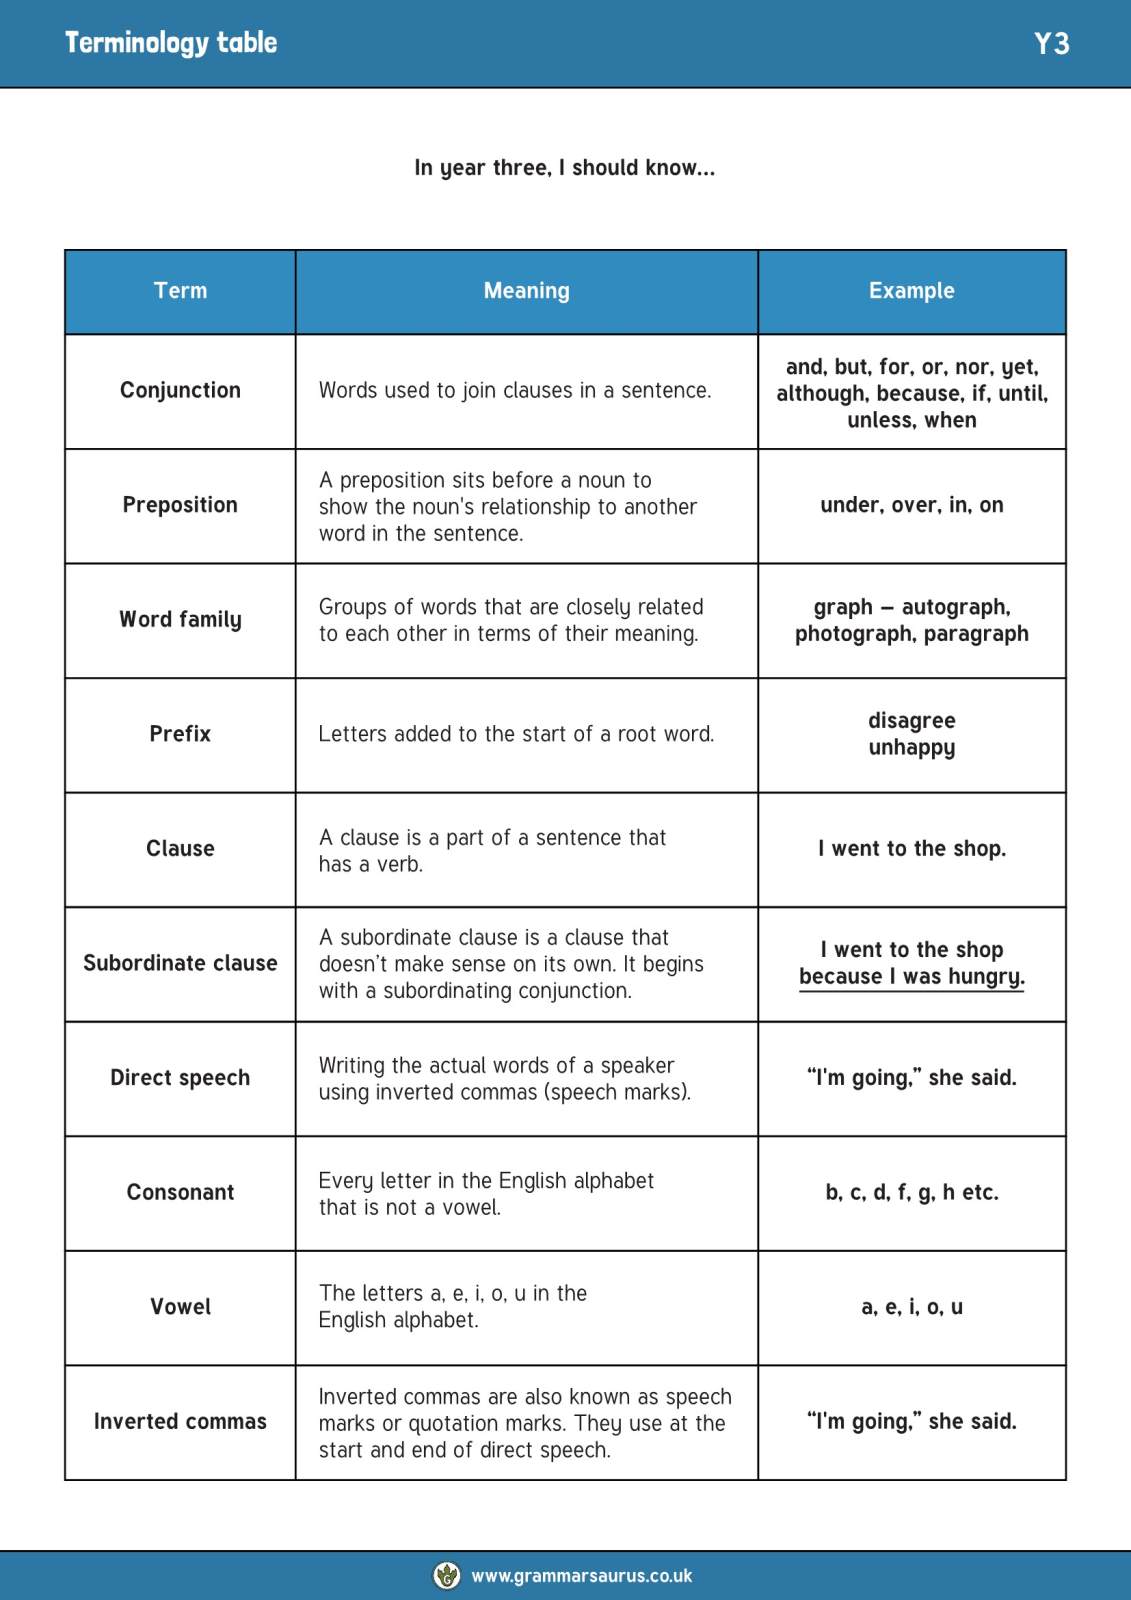 Grammar terminology table Yr3